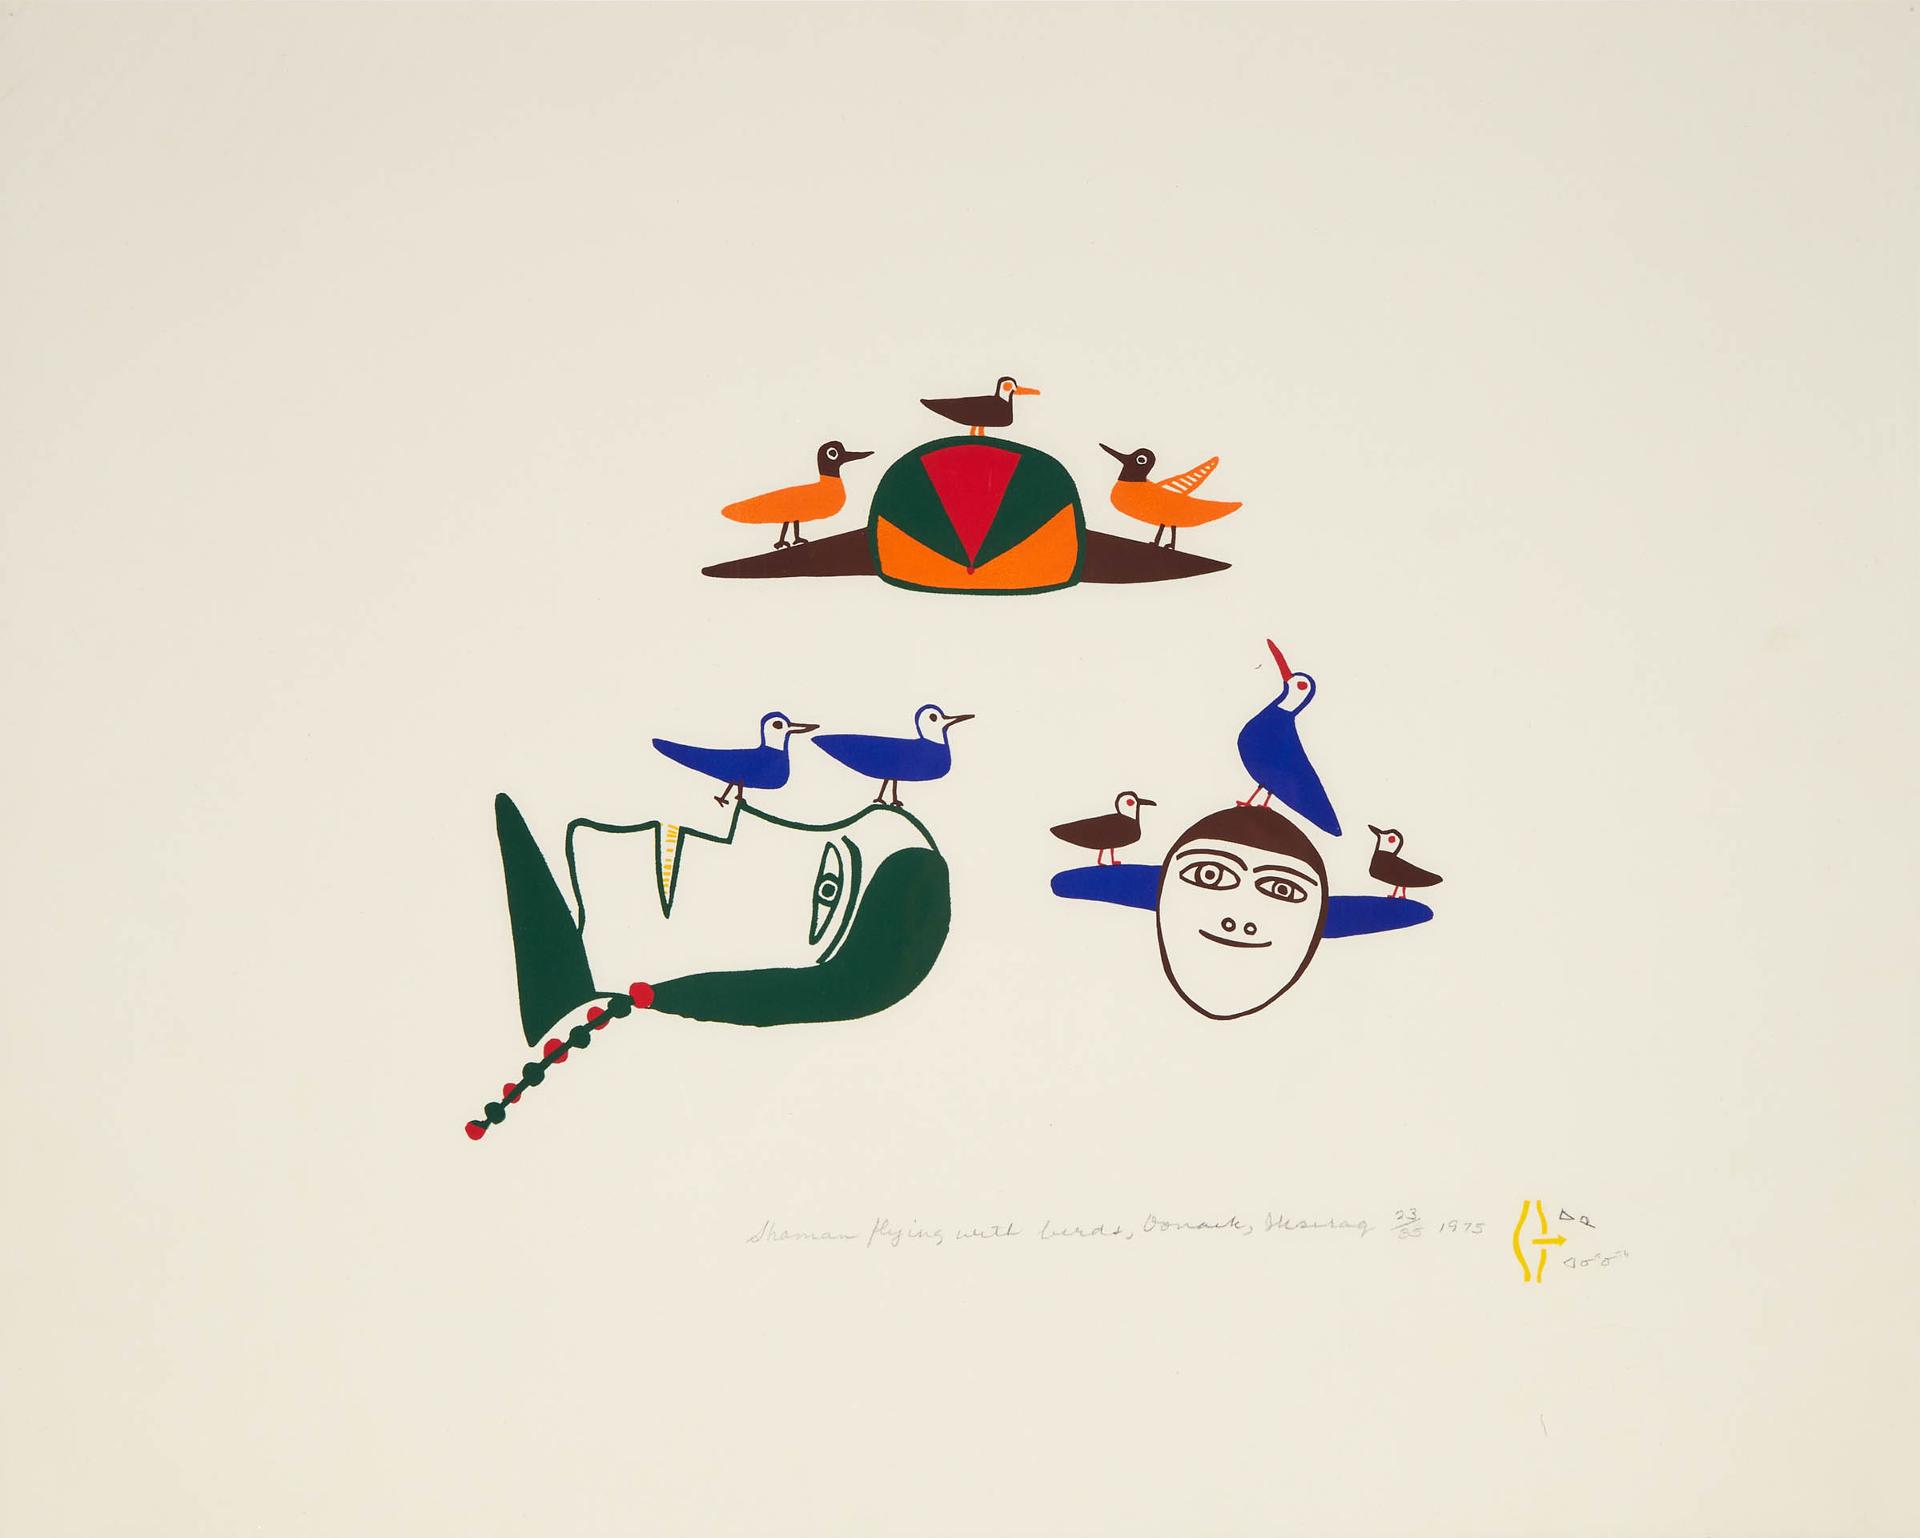 Jessie Oonark (1906-1985) - Shaman Flying With Birds, 1975